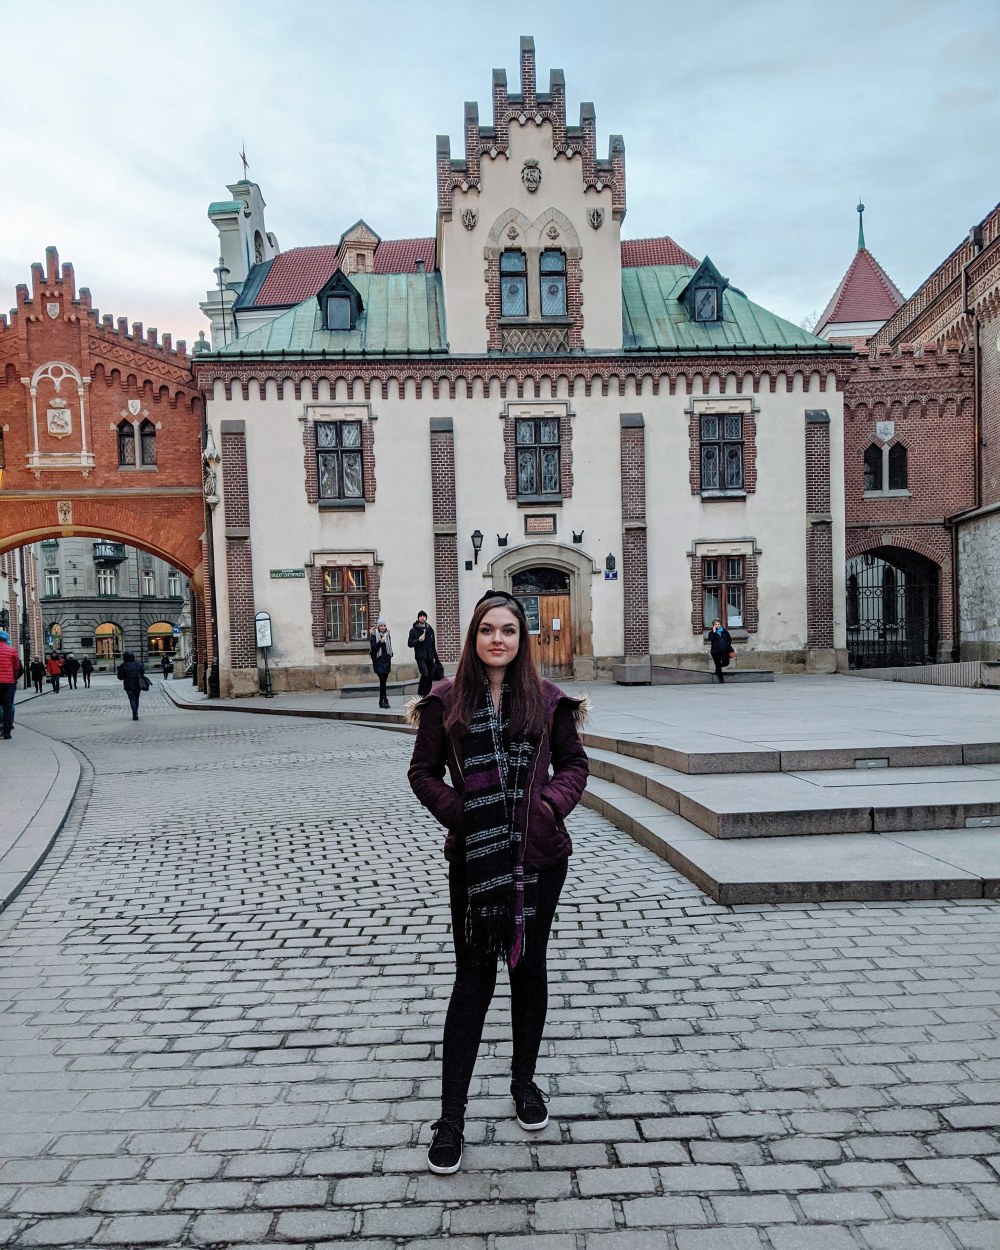 Exploring Krakow Old Town